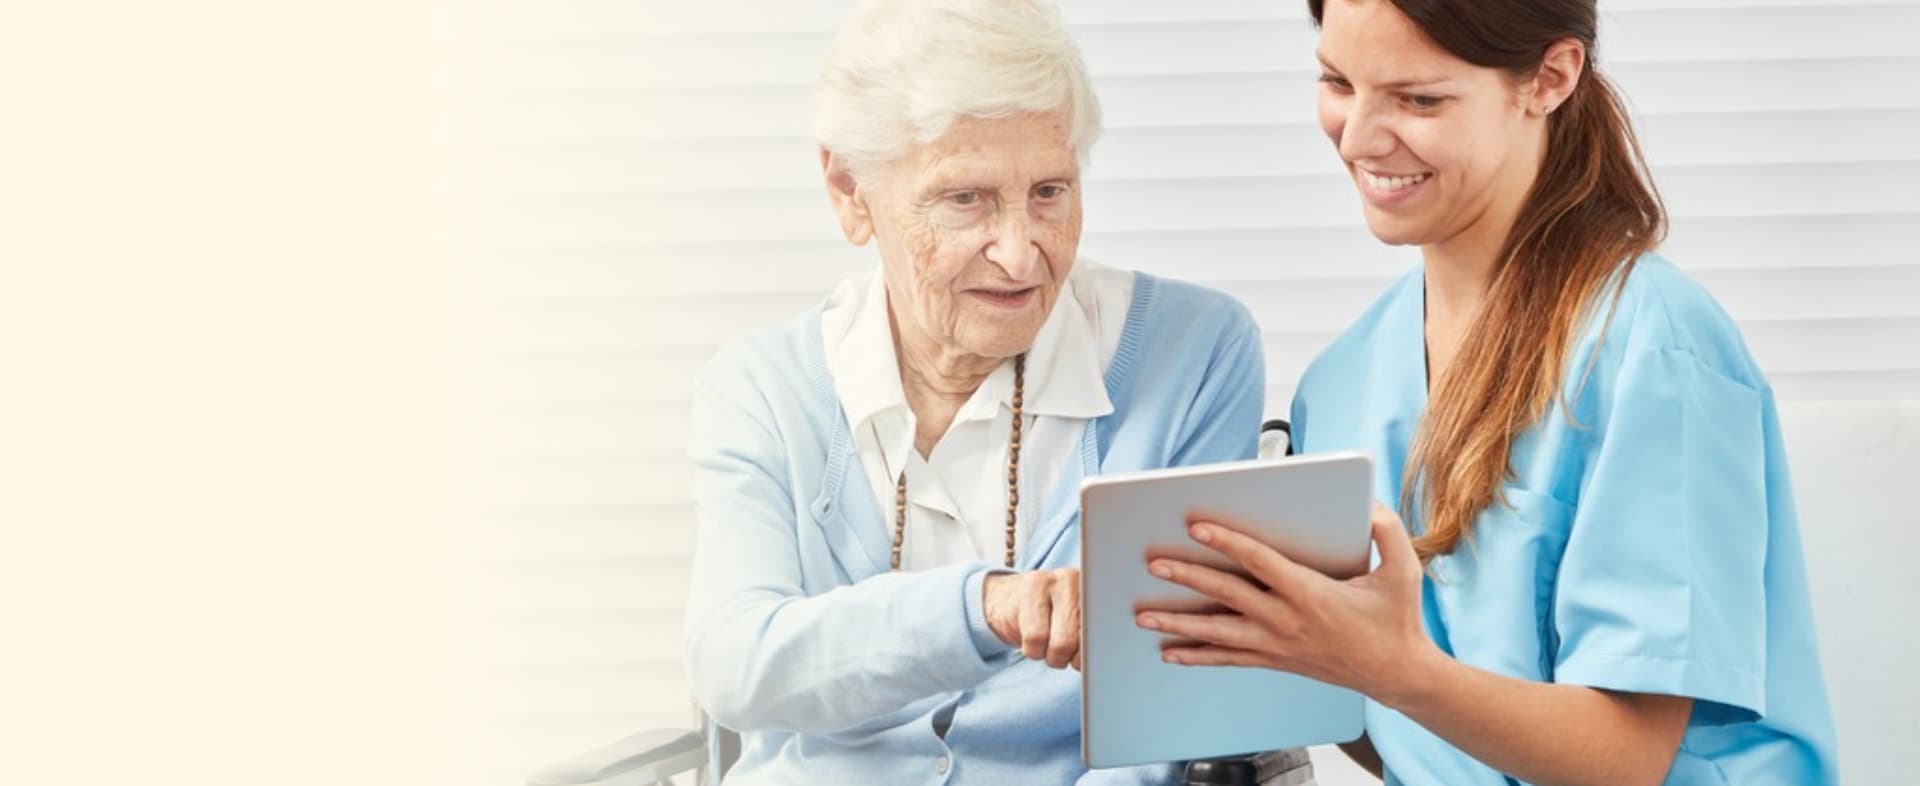 caregiver teaching a senior woman using tablet